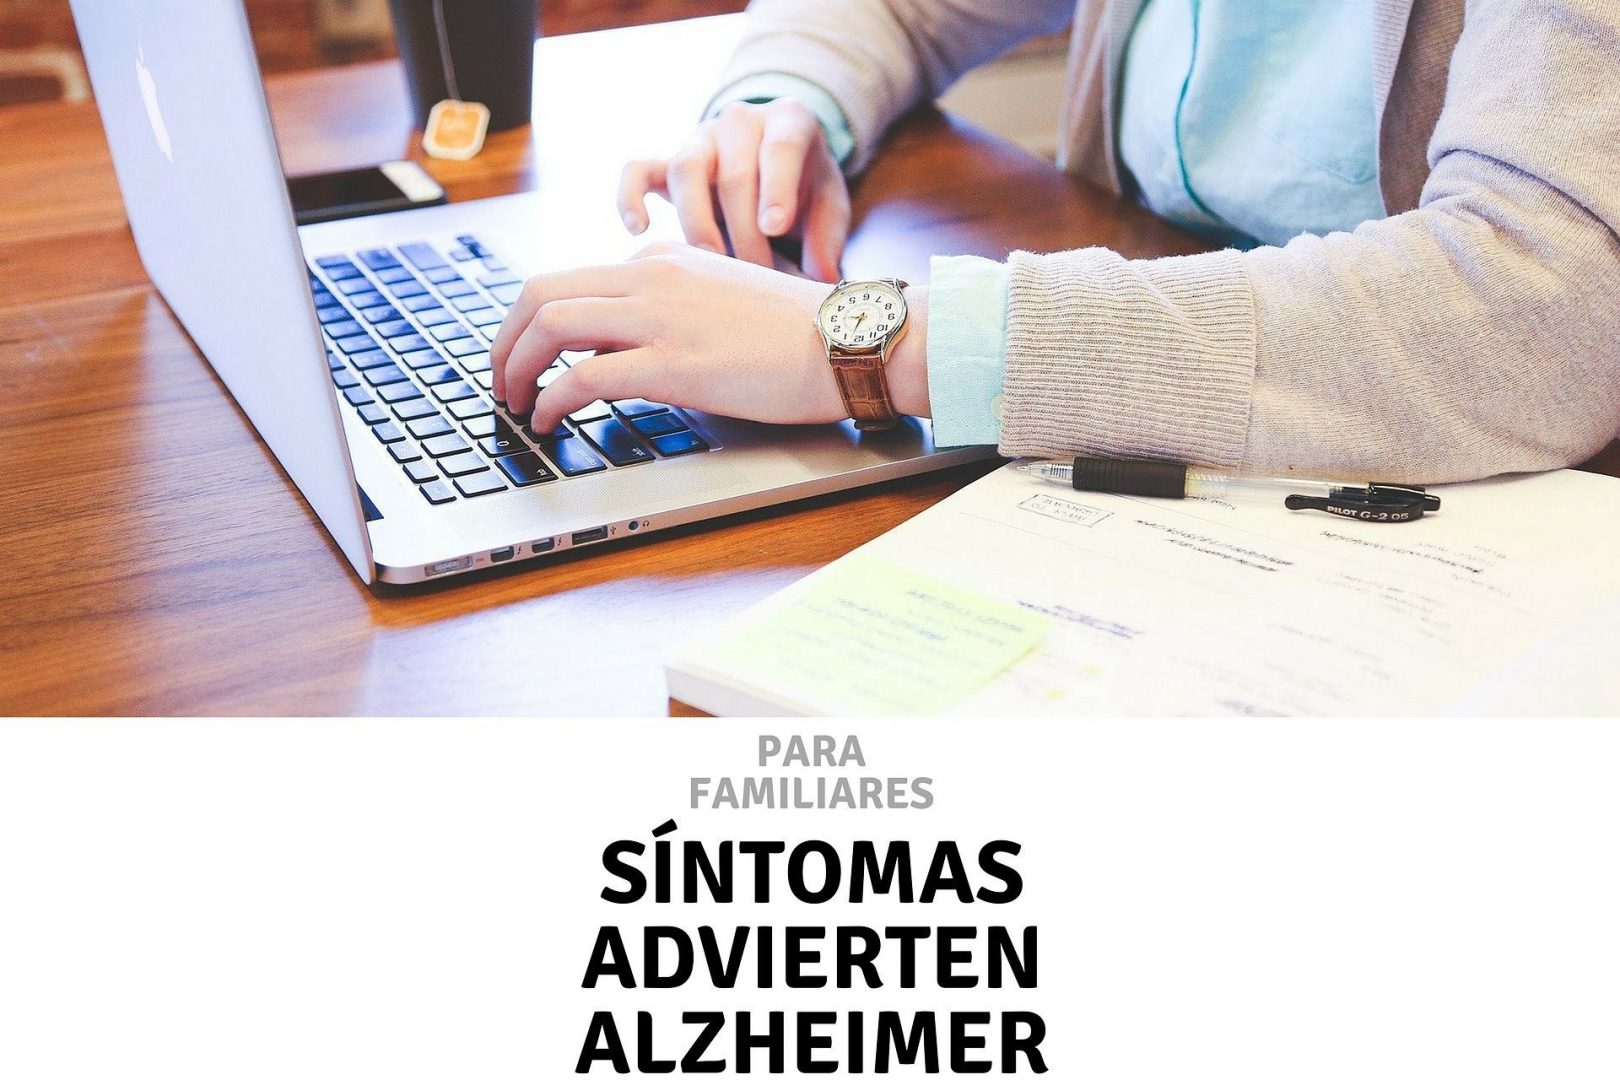 10 síntomas que advierten del Alzheimer